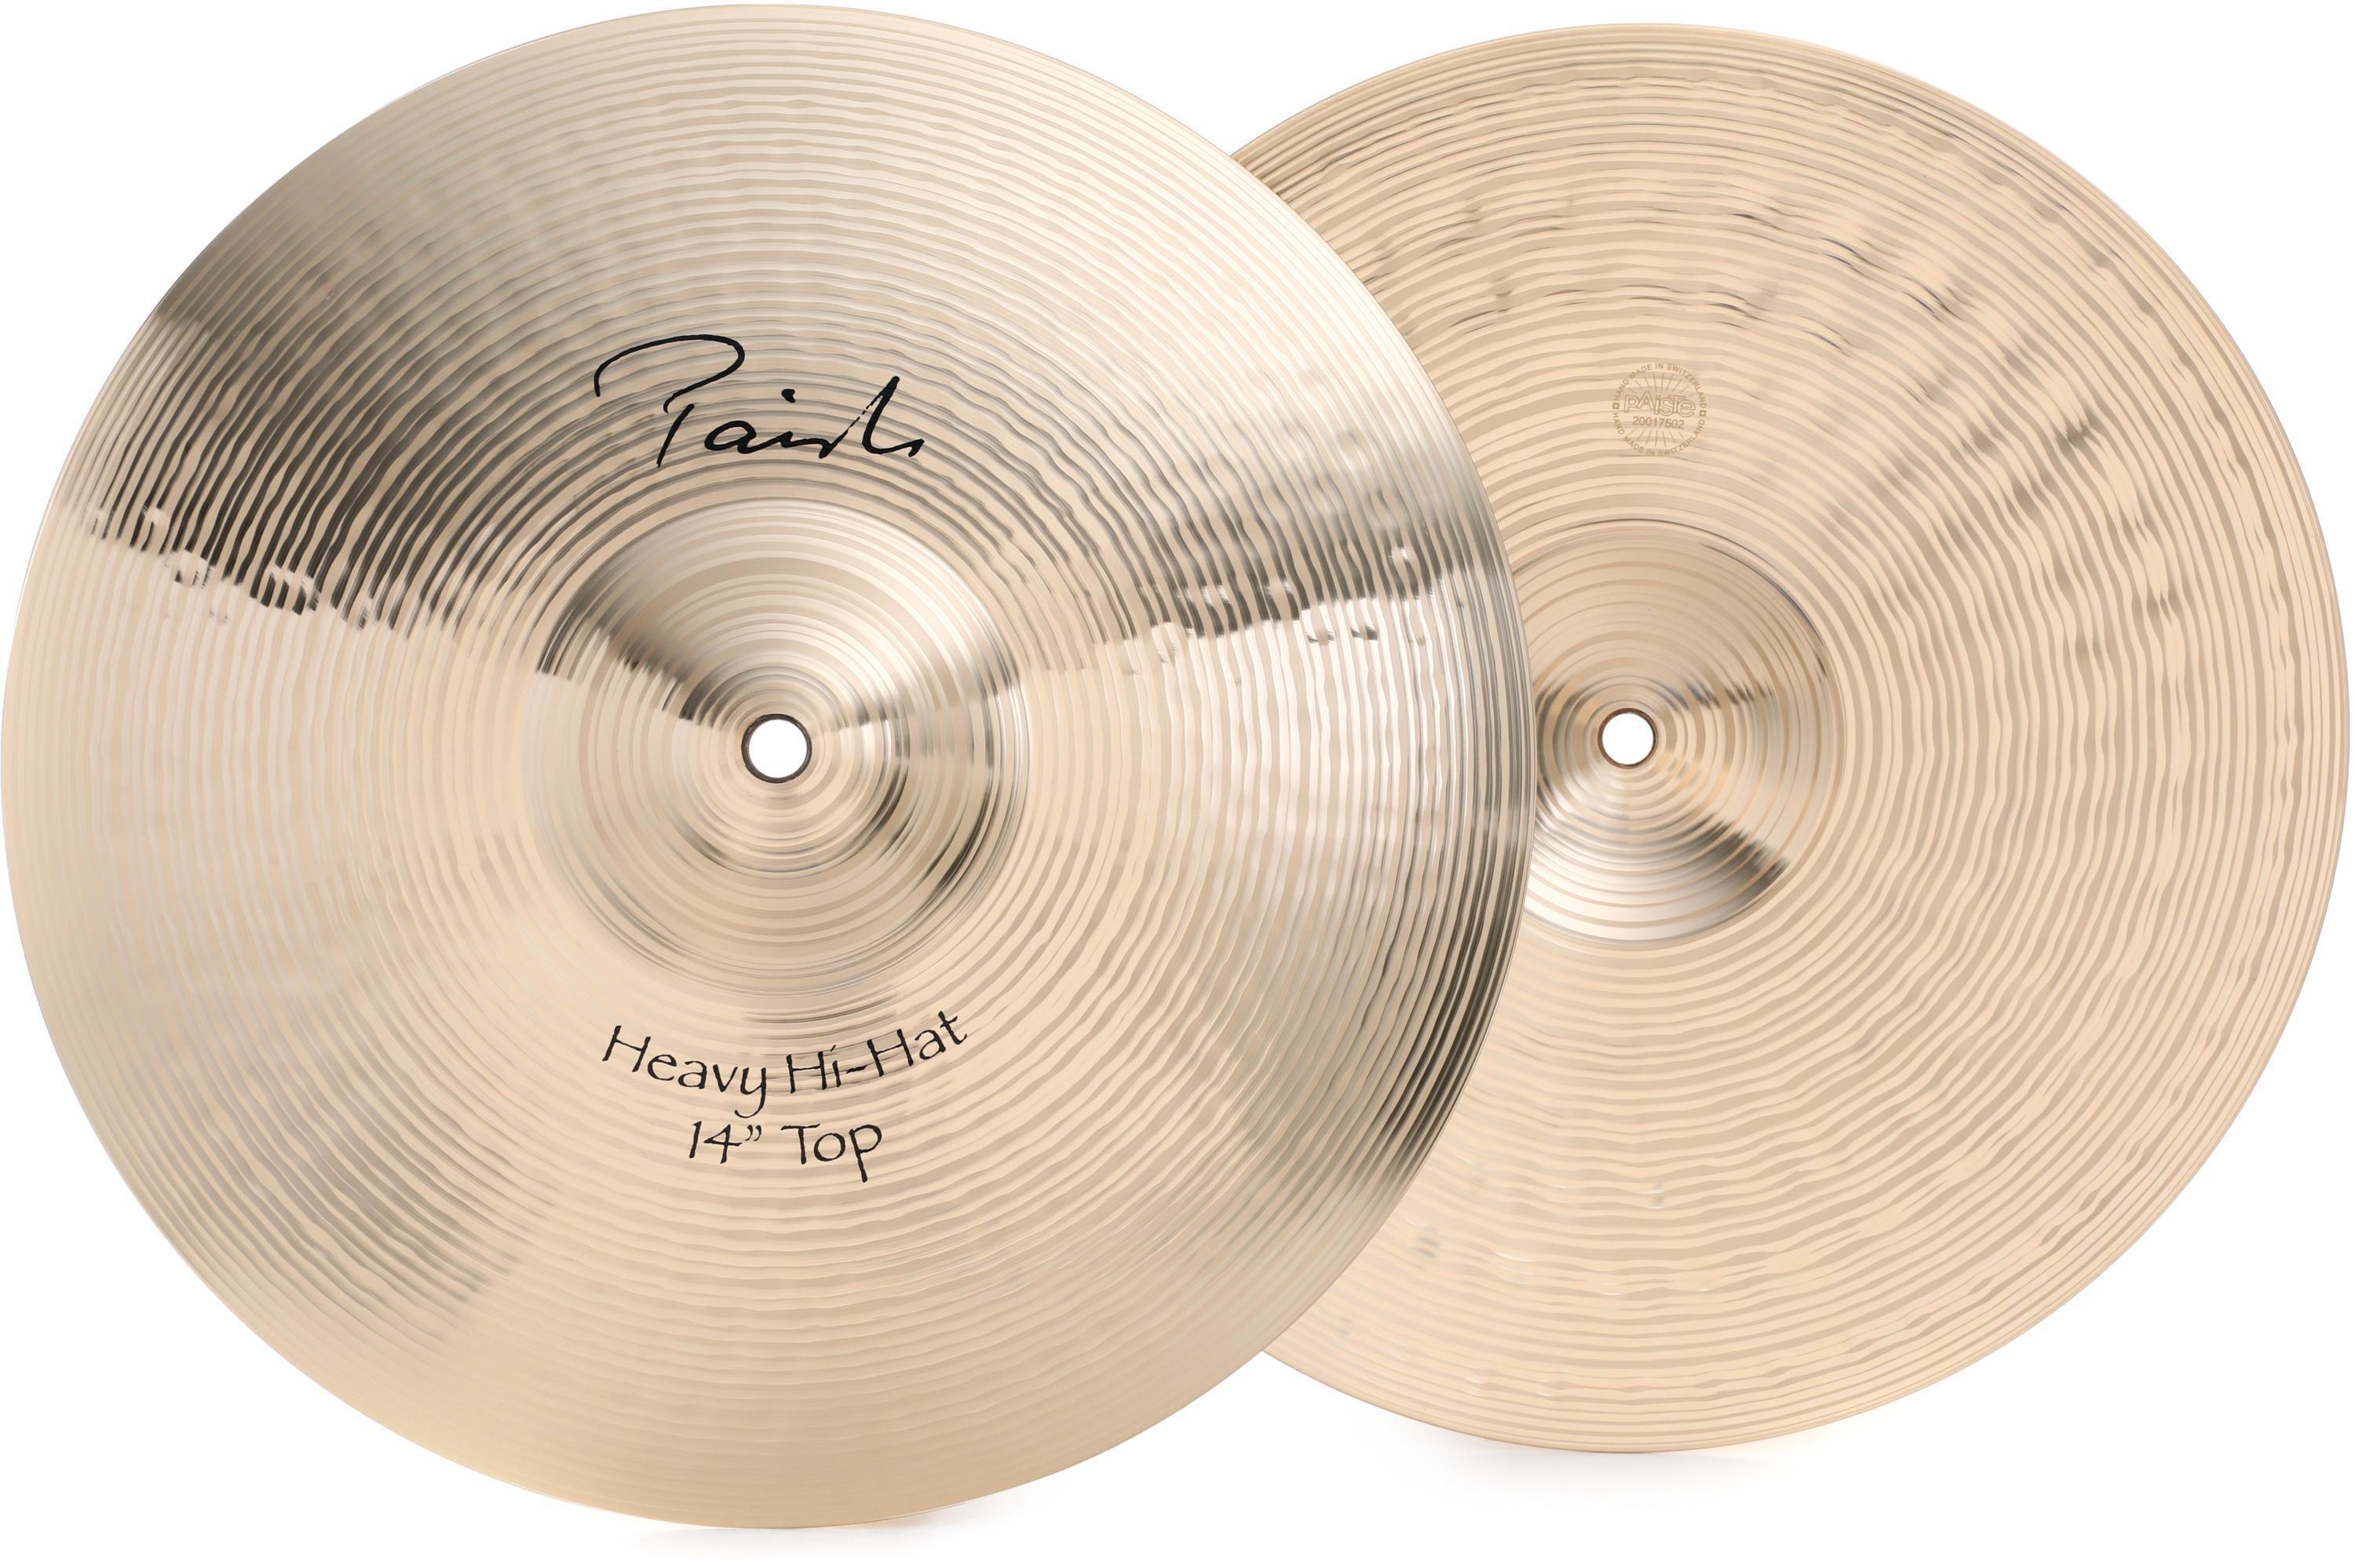 Paiste Signature Heavy Hi-hat Cymbals - 14 inch